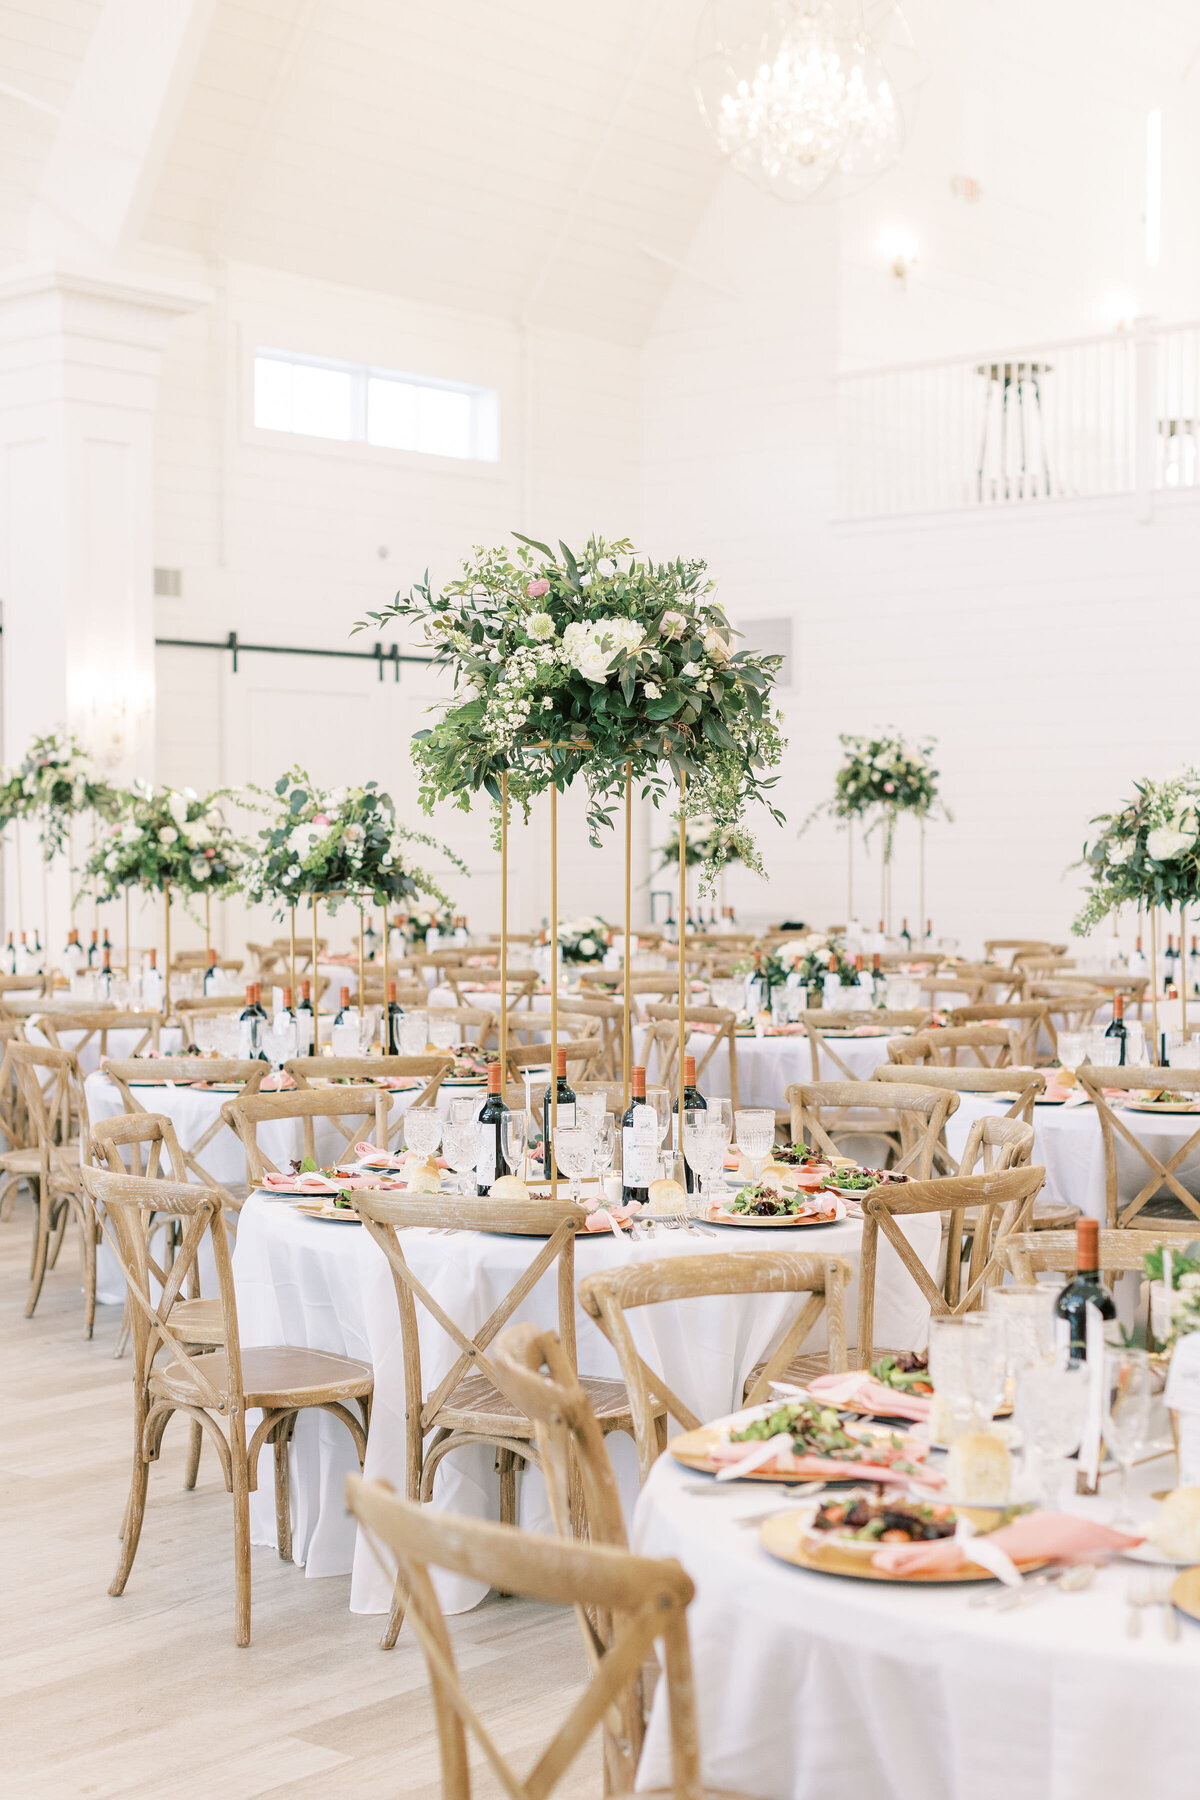 White barn wedding venue set up for a wedding reception